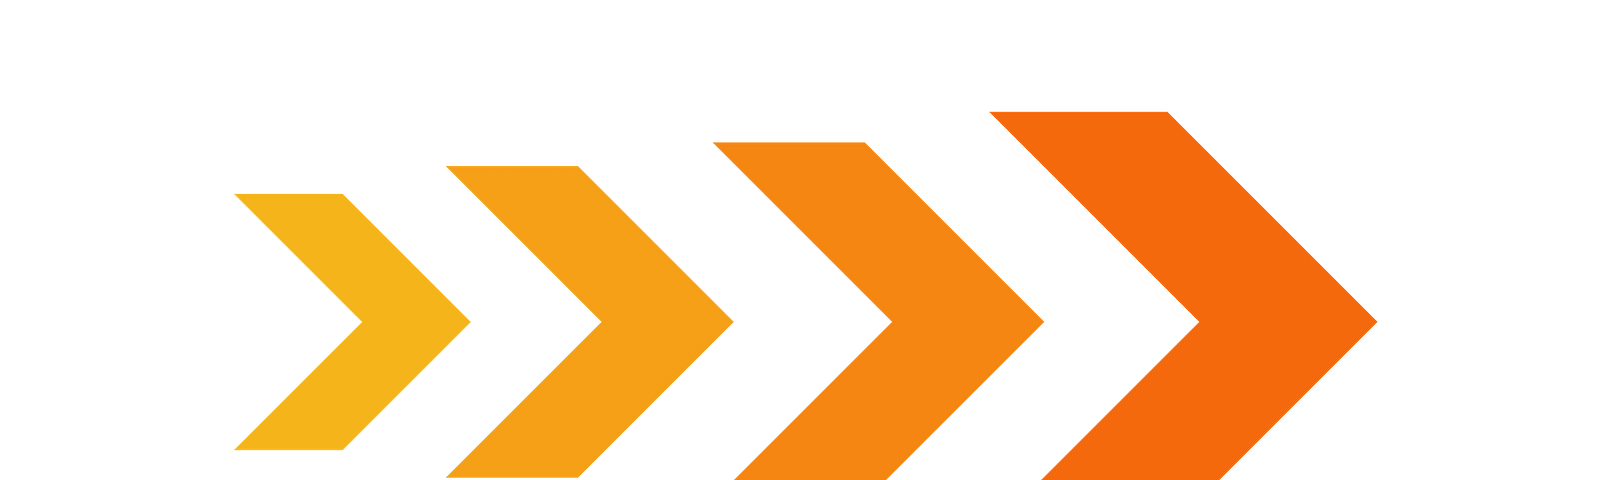 hiring accelerator logo